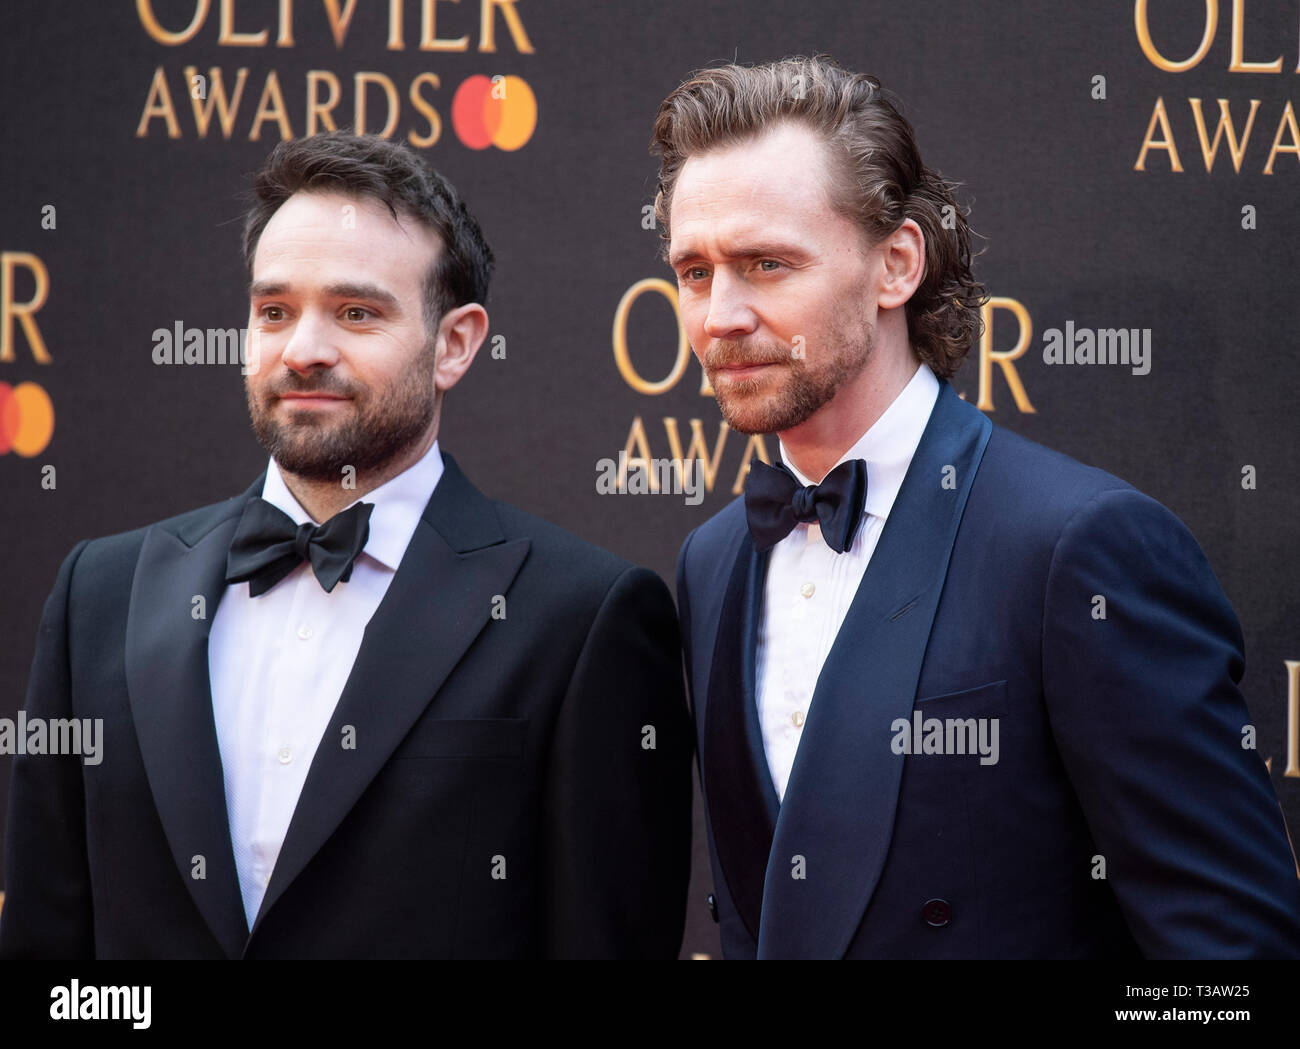 Charlie Cox et Tom Hiddleston assister à l'Olivier Awards 2019 avec Mastercard au Royal Albert Hall. Banque D'Images